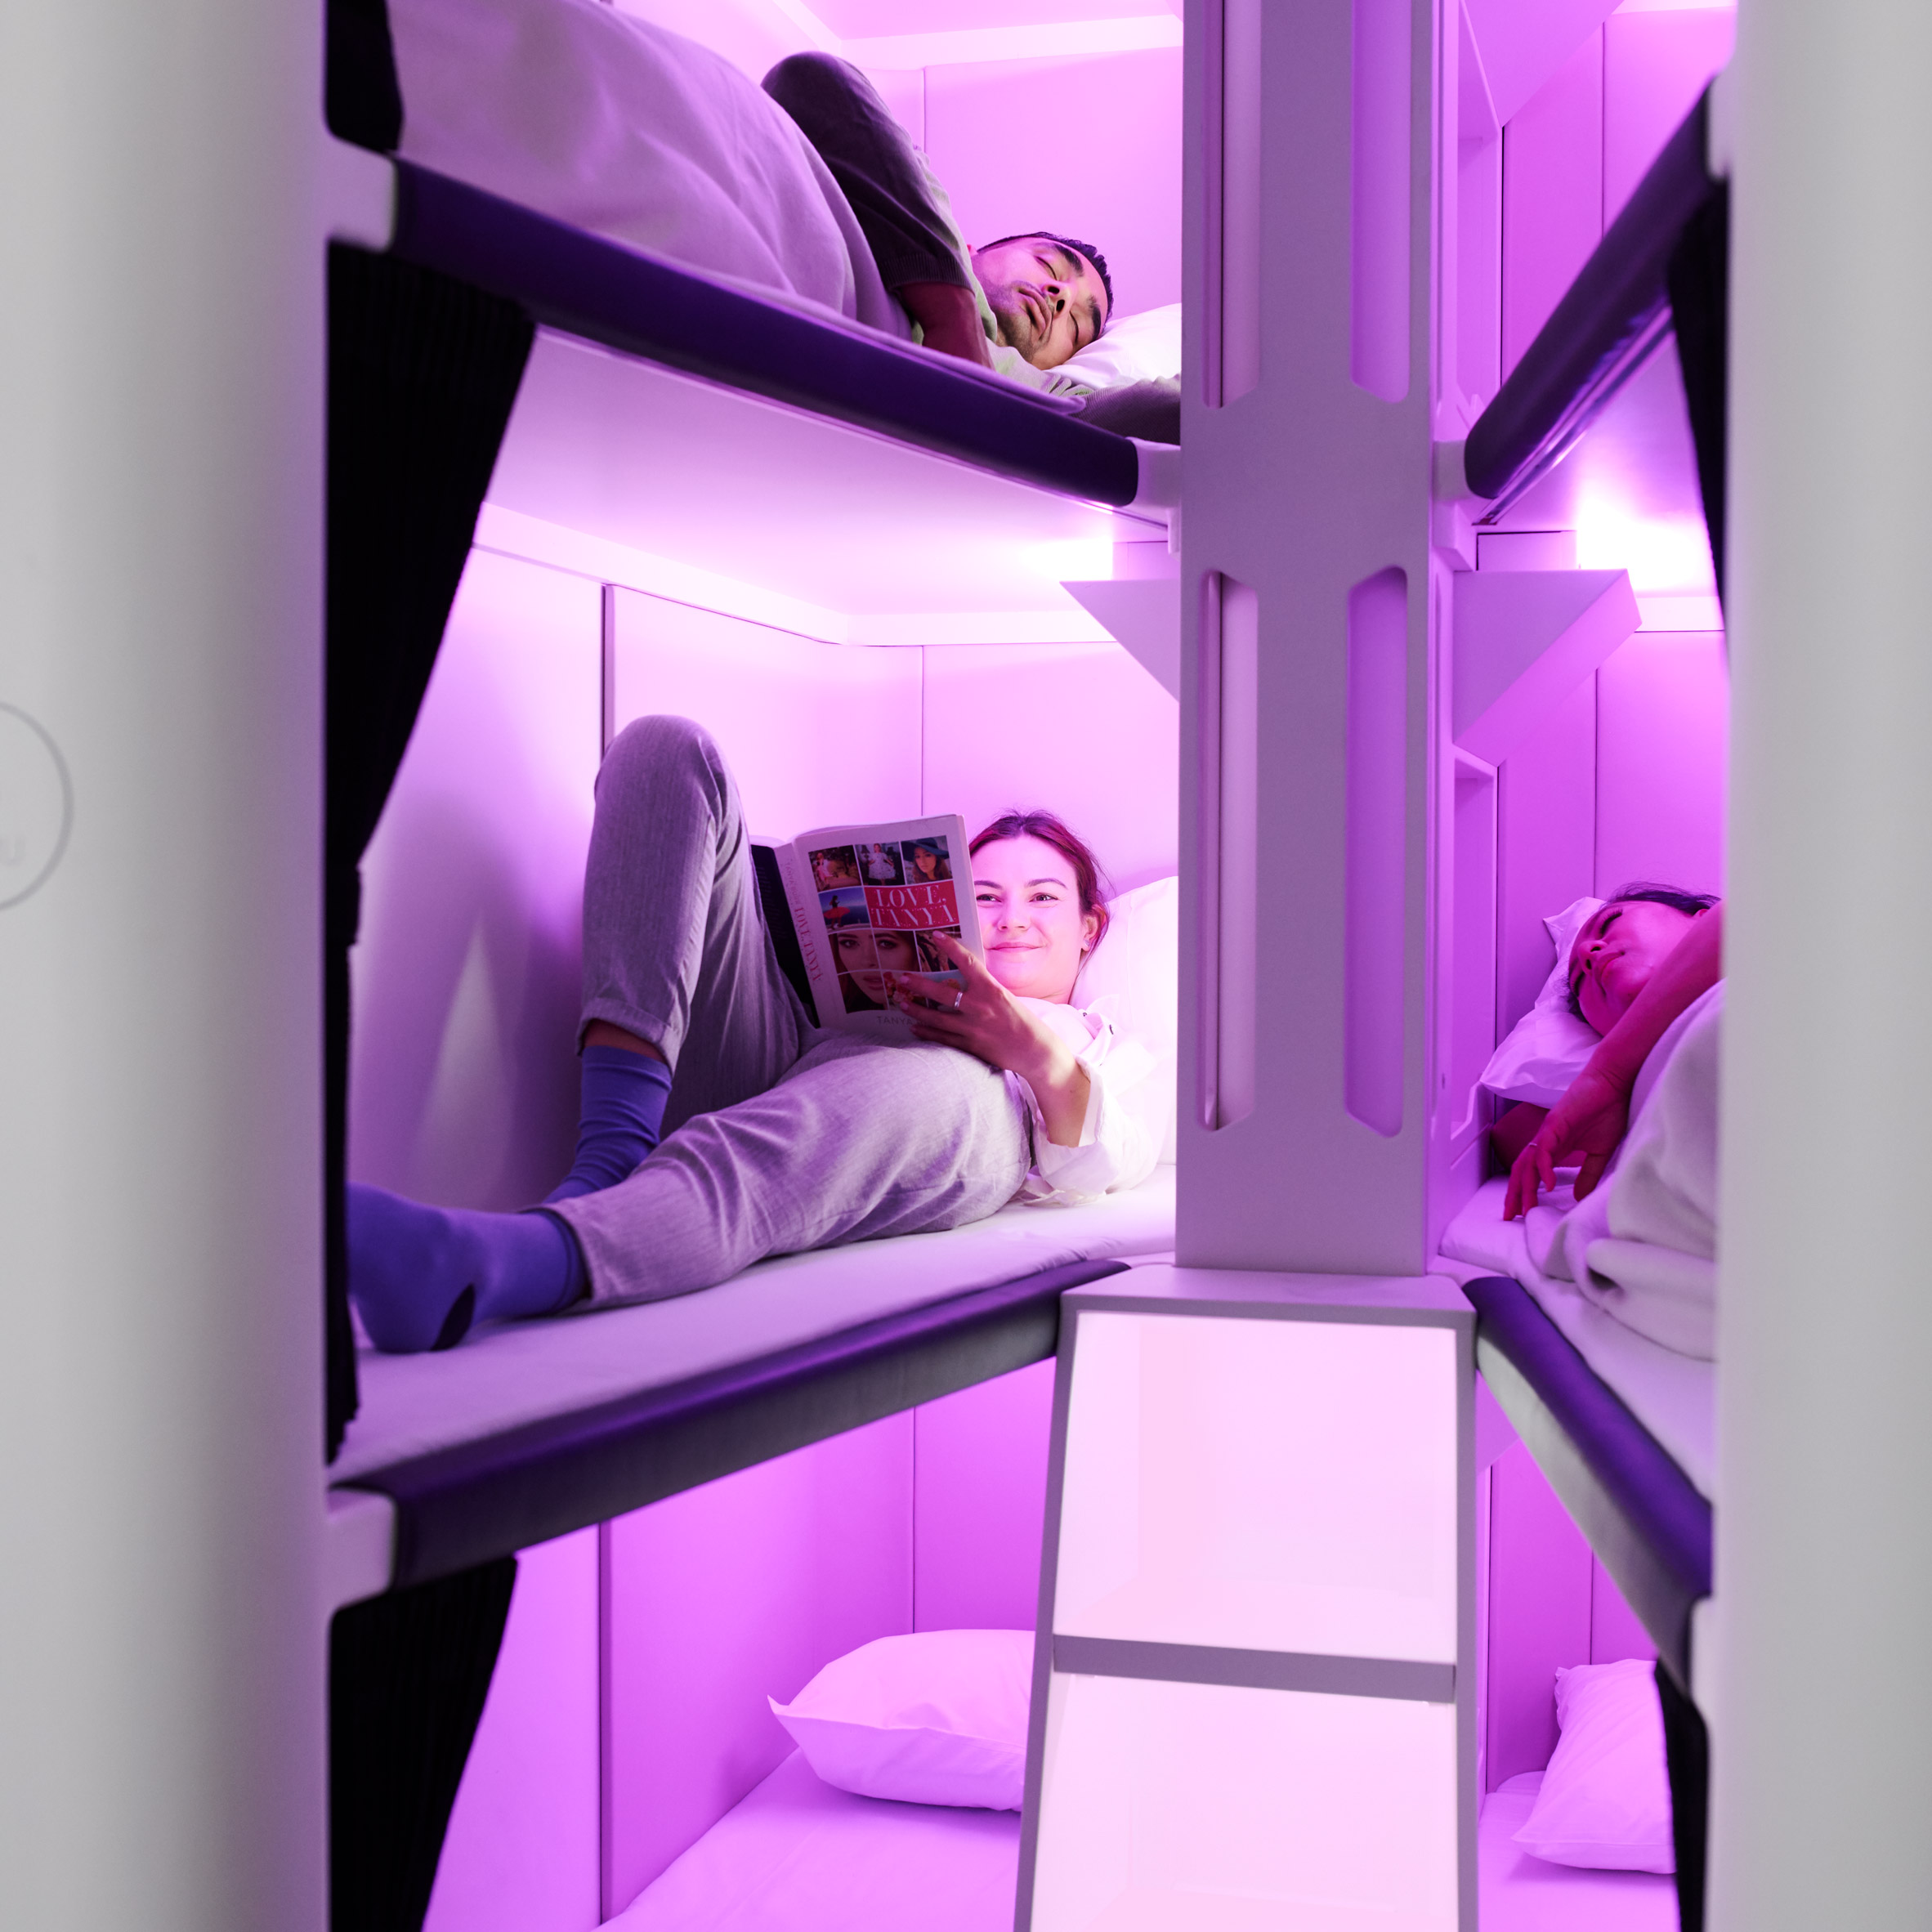 Skynest is a full-length sleeping pod for economy flyers